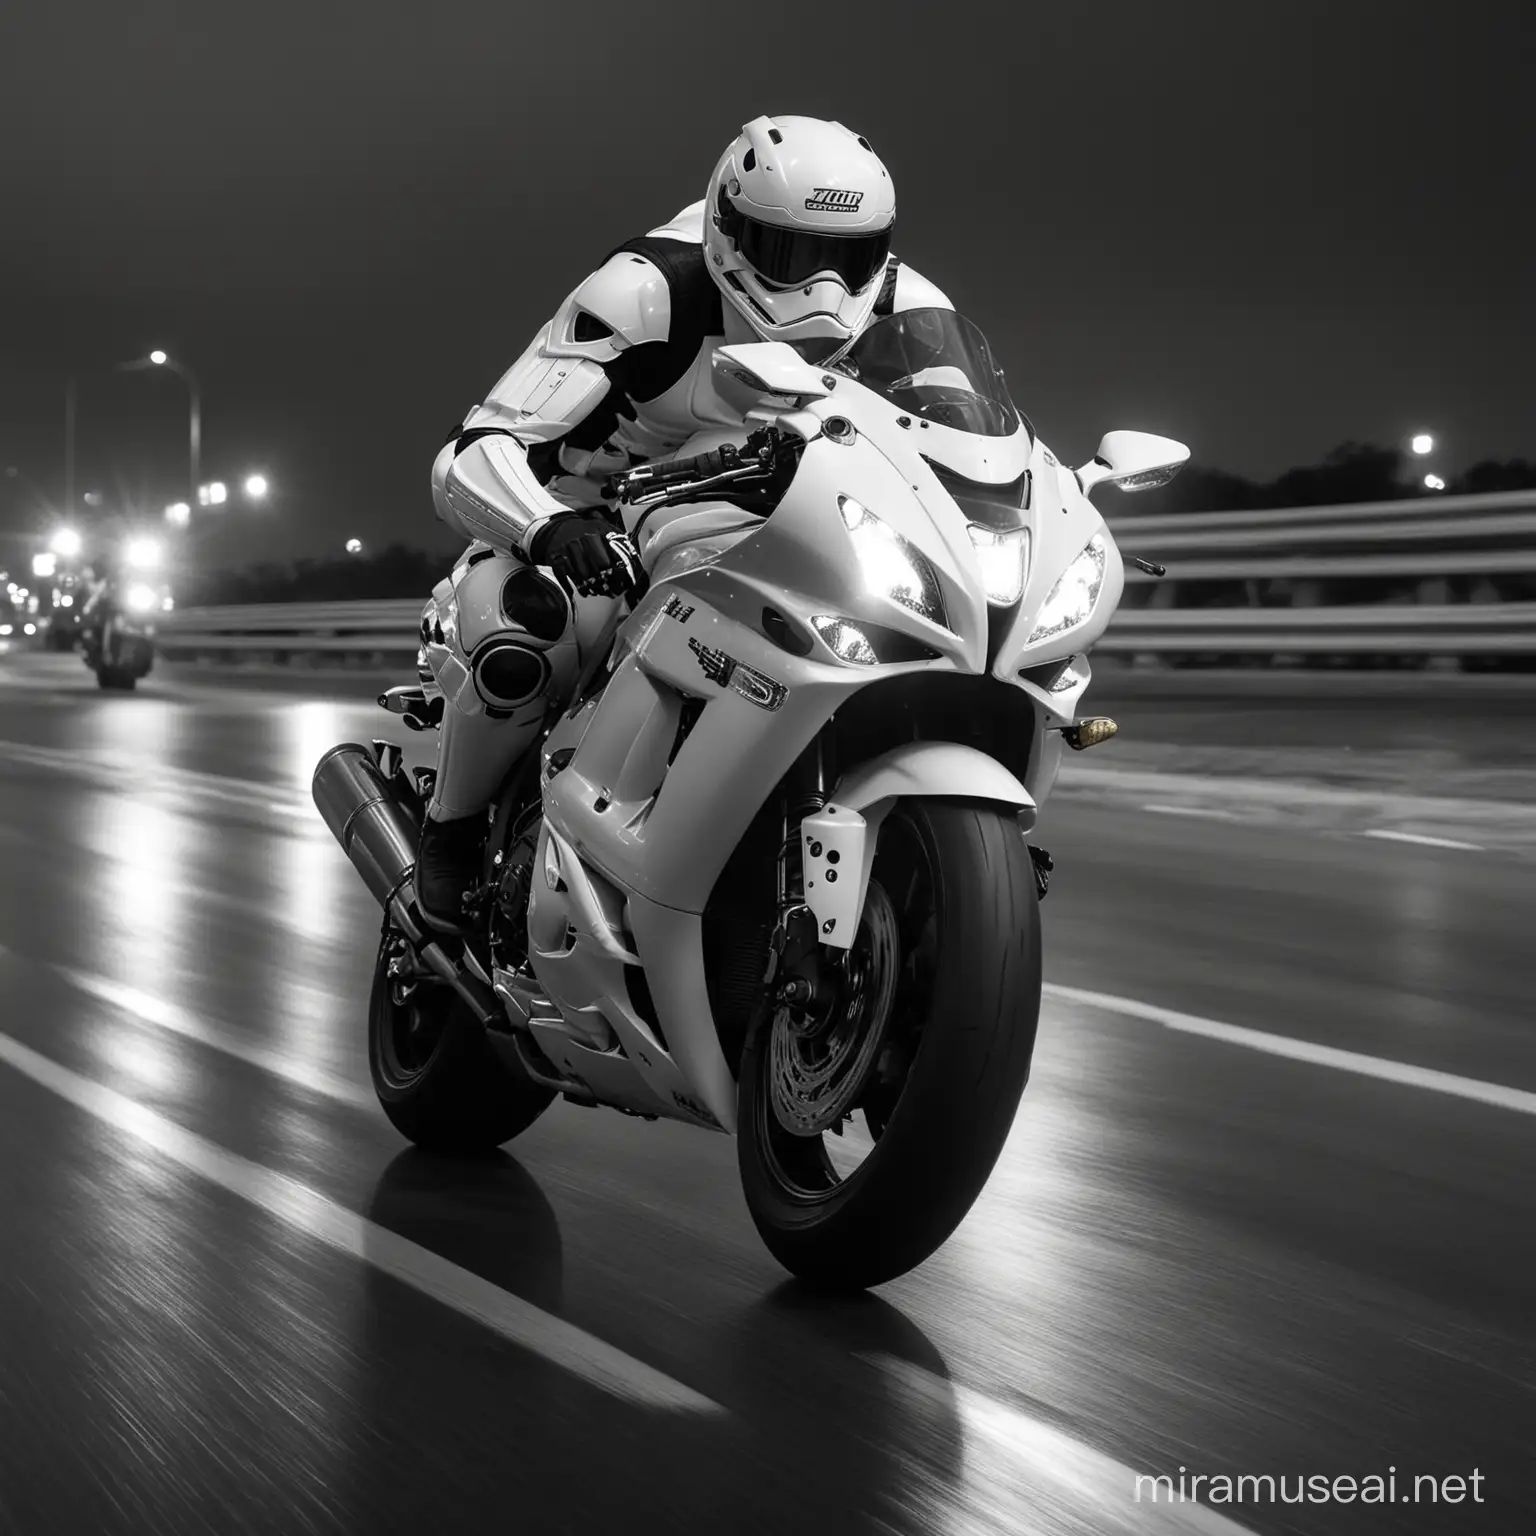 Storm Trooper on Suzuki Hayabusa Racing at Night in Dramatic Black and White